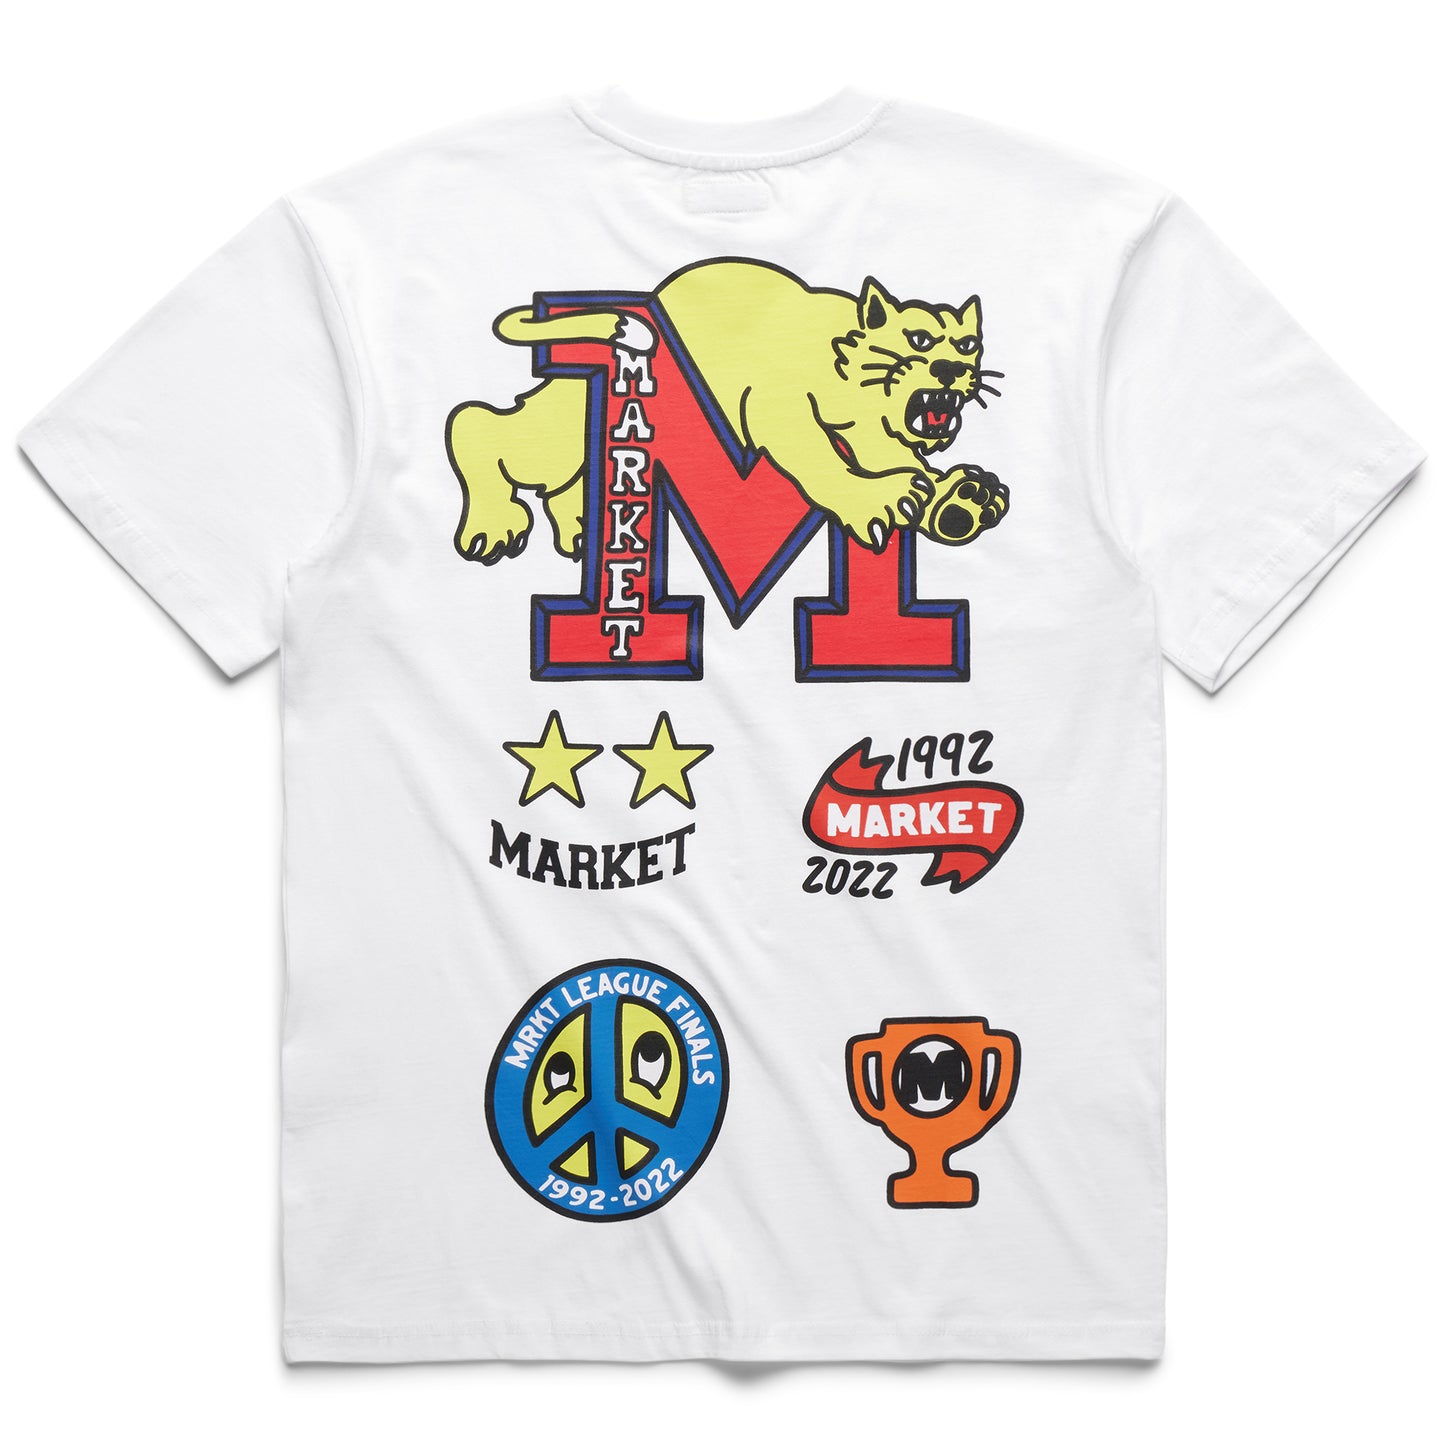 MARKET State Champs T-Shirt